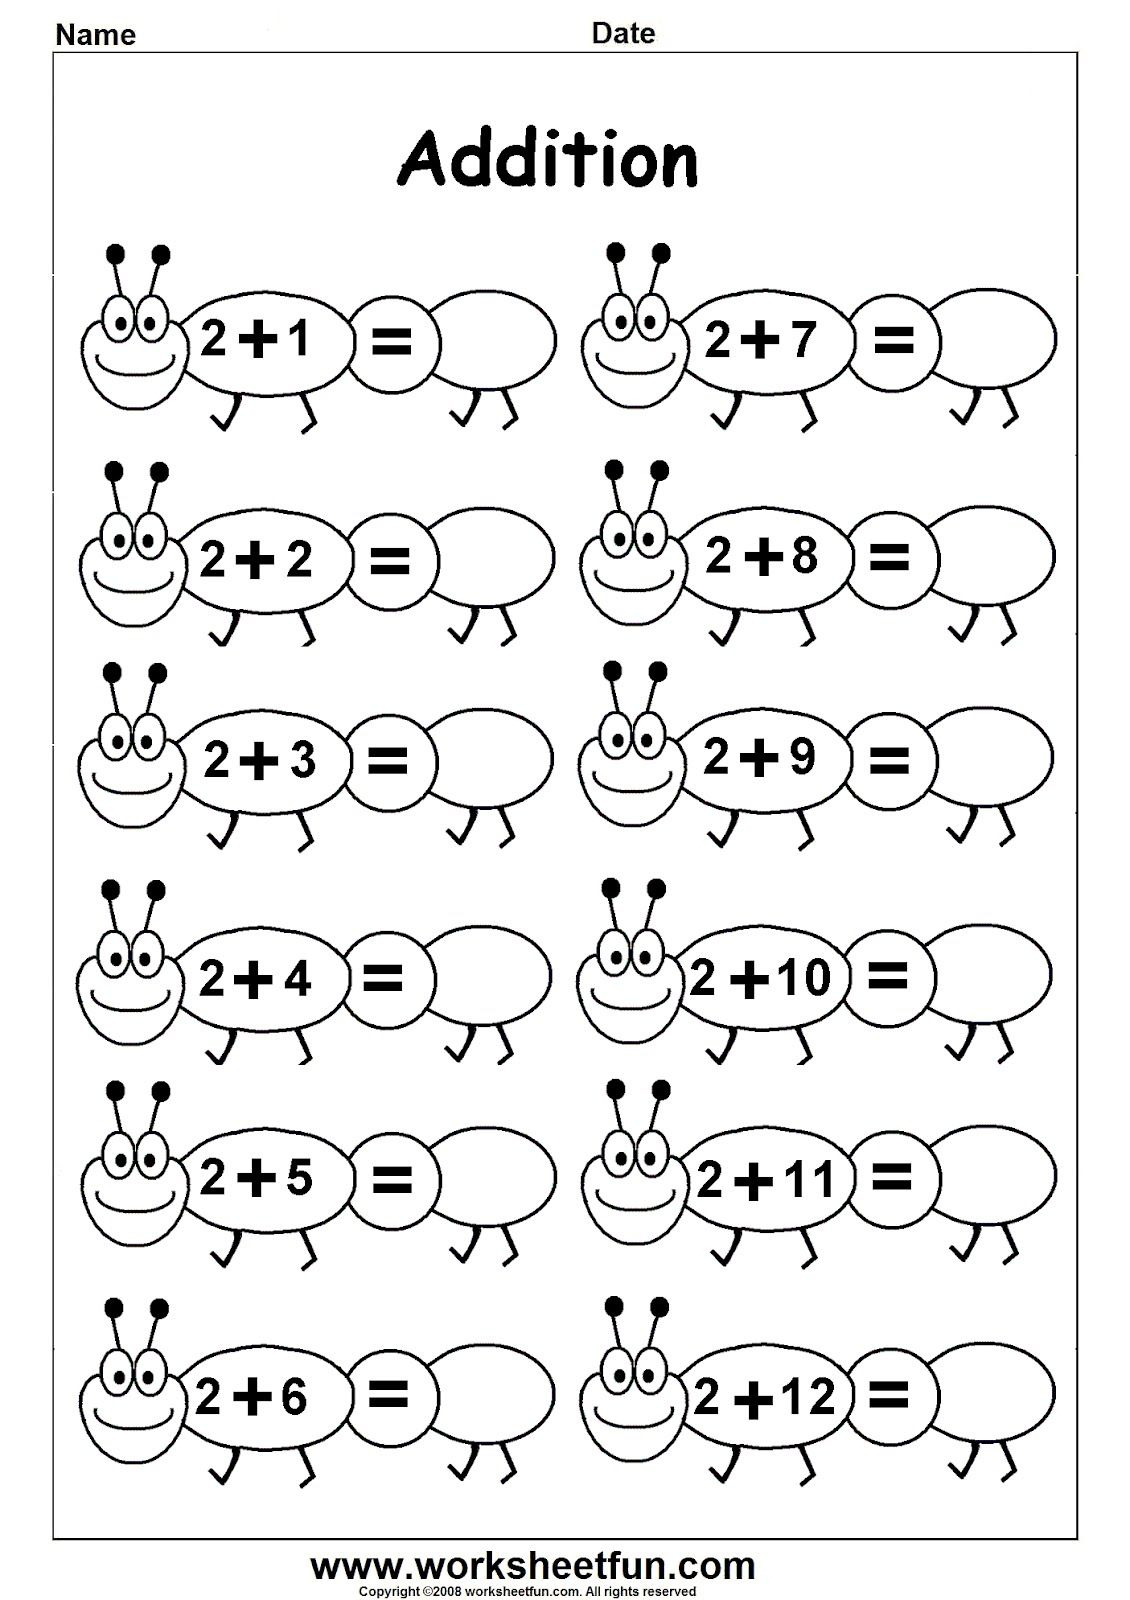 Worksheetfun - Free Printable Worksheets … | Classroom Ideas | Pinte… - Free Printable Time Worksheets For Kindergarten